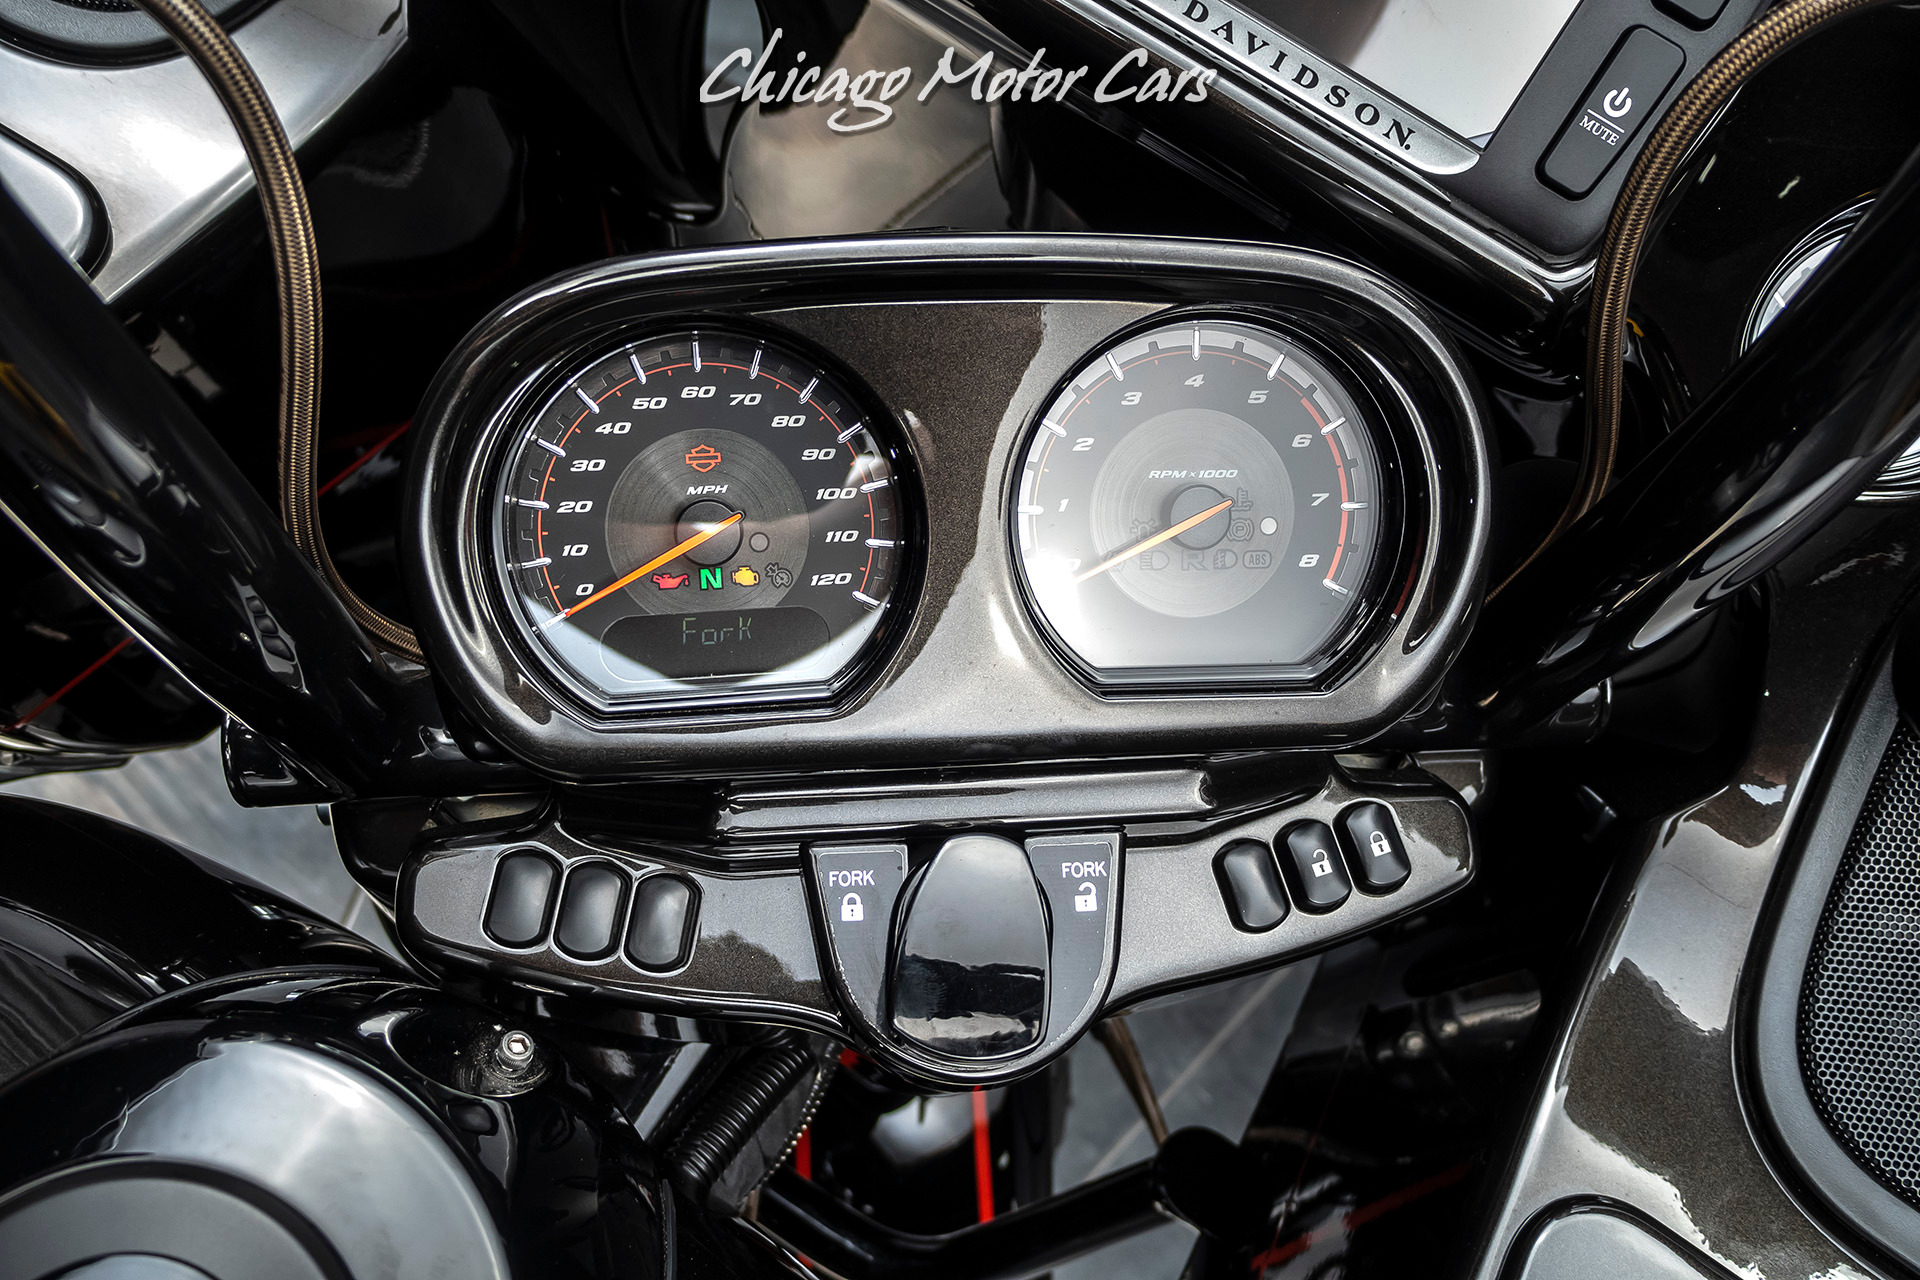 Used-2018-Harley-Davidson-CVO-ROAD-GLIDE-CVO-S-S-128-CI---BAKER-GRUDGE-BOX-INCREDIBLE